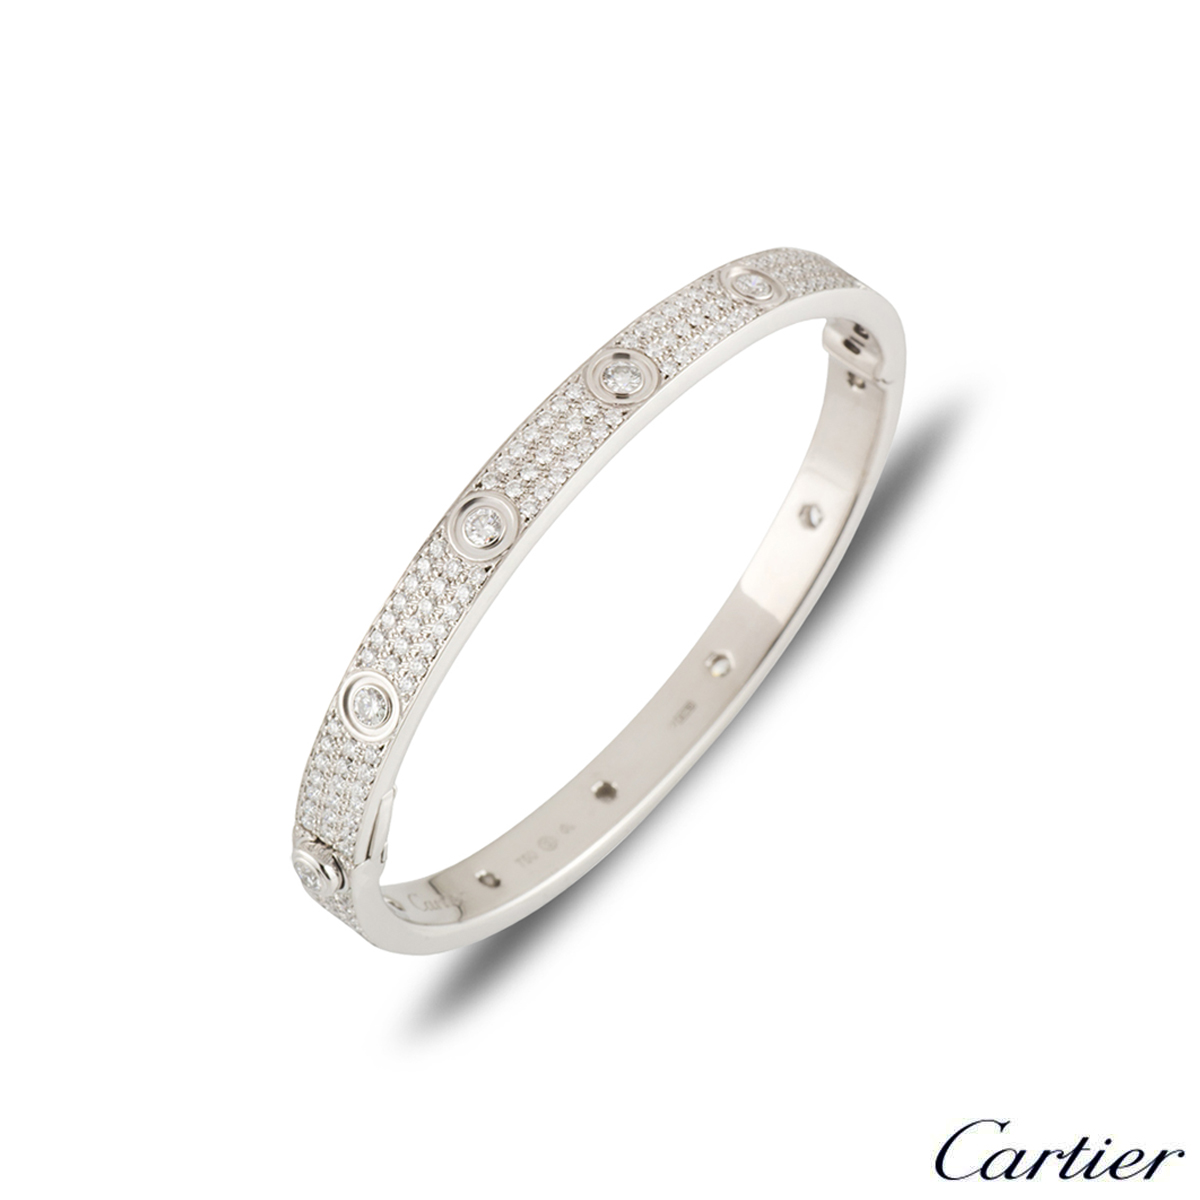 Cartier White Gold Pave Diamond Love Bracelet Size 17 N6033602